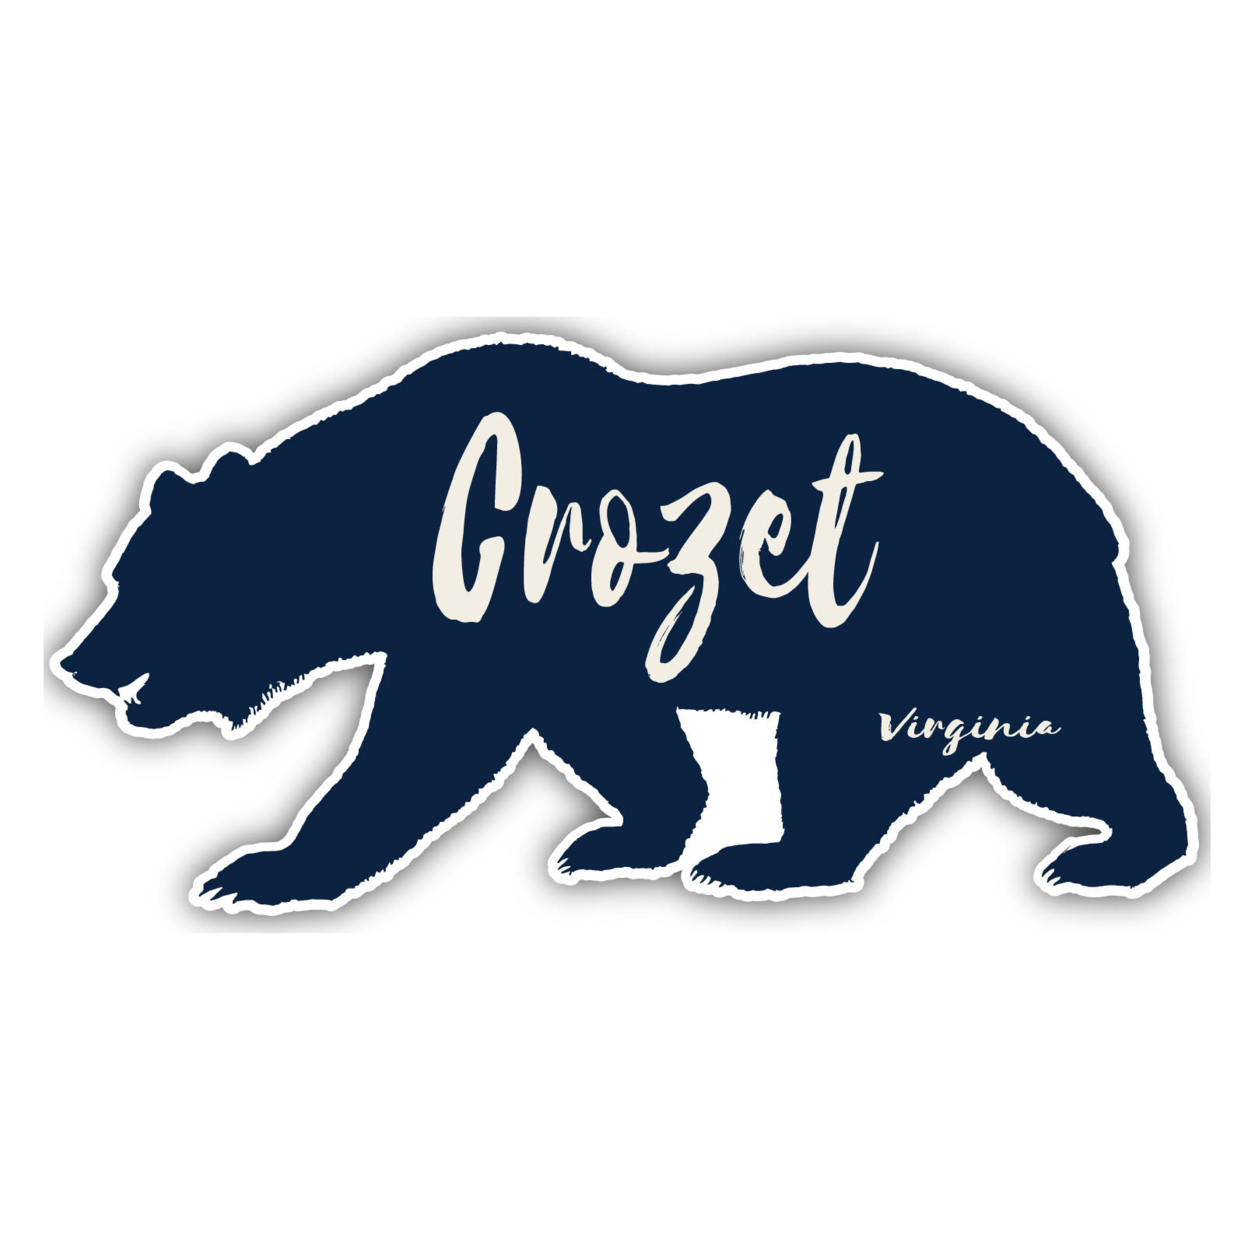 Crozet Virginia Souvenir Decorative Stickers (Choose Theme And Size) - Single Unit, 10-Inch, Bear